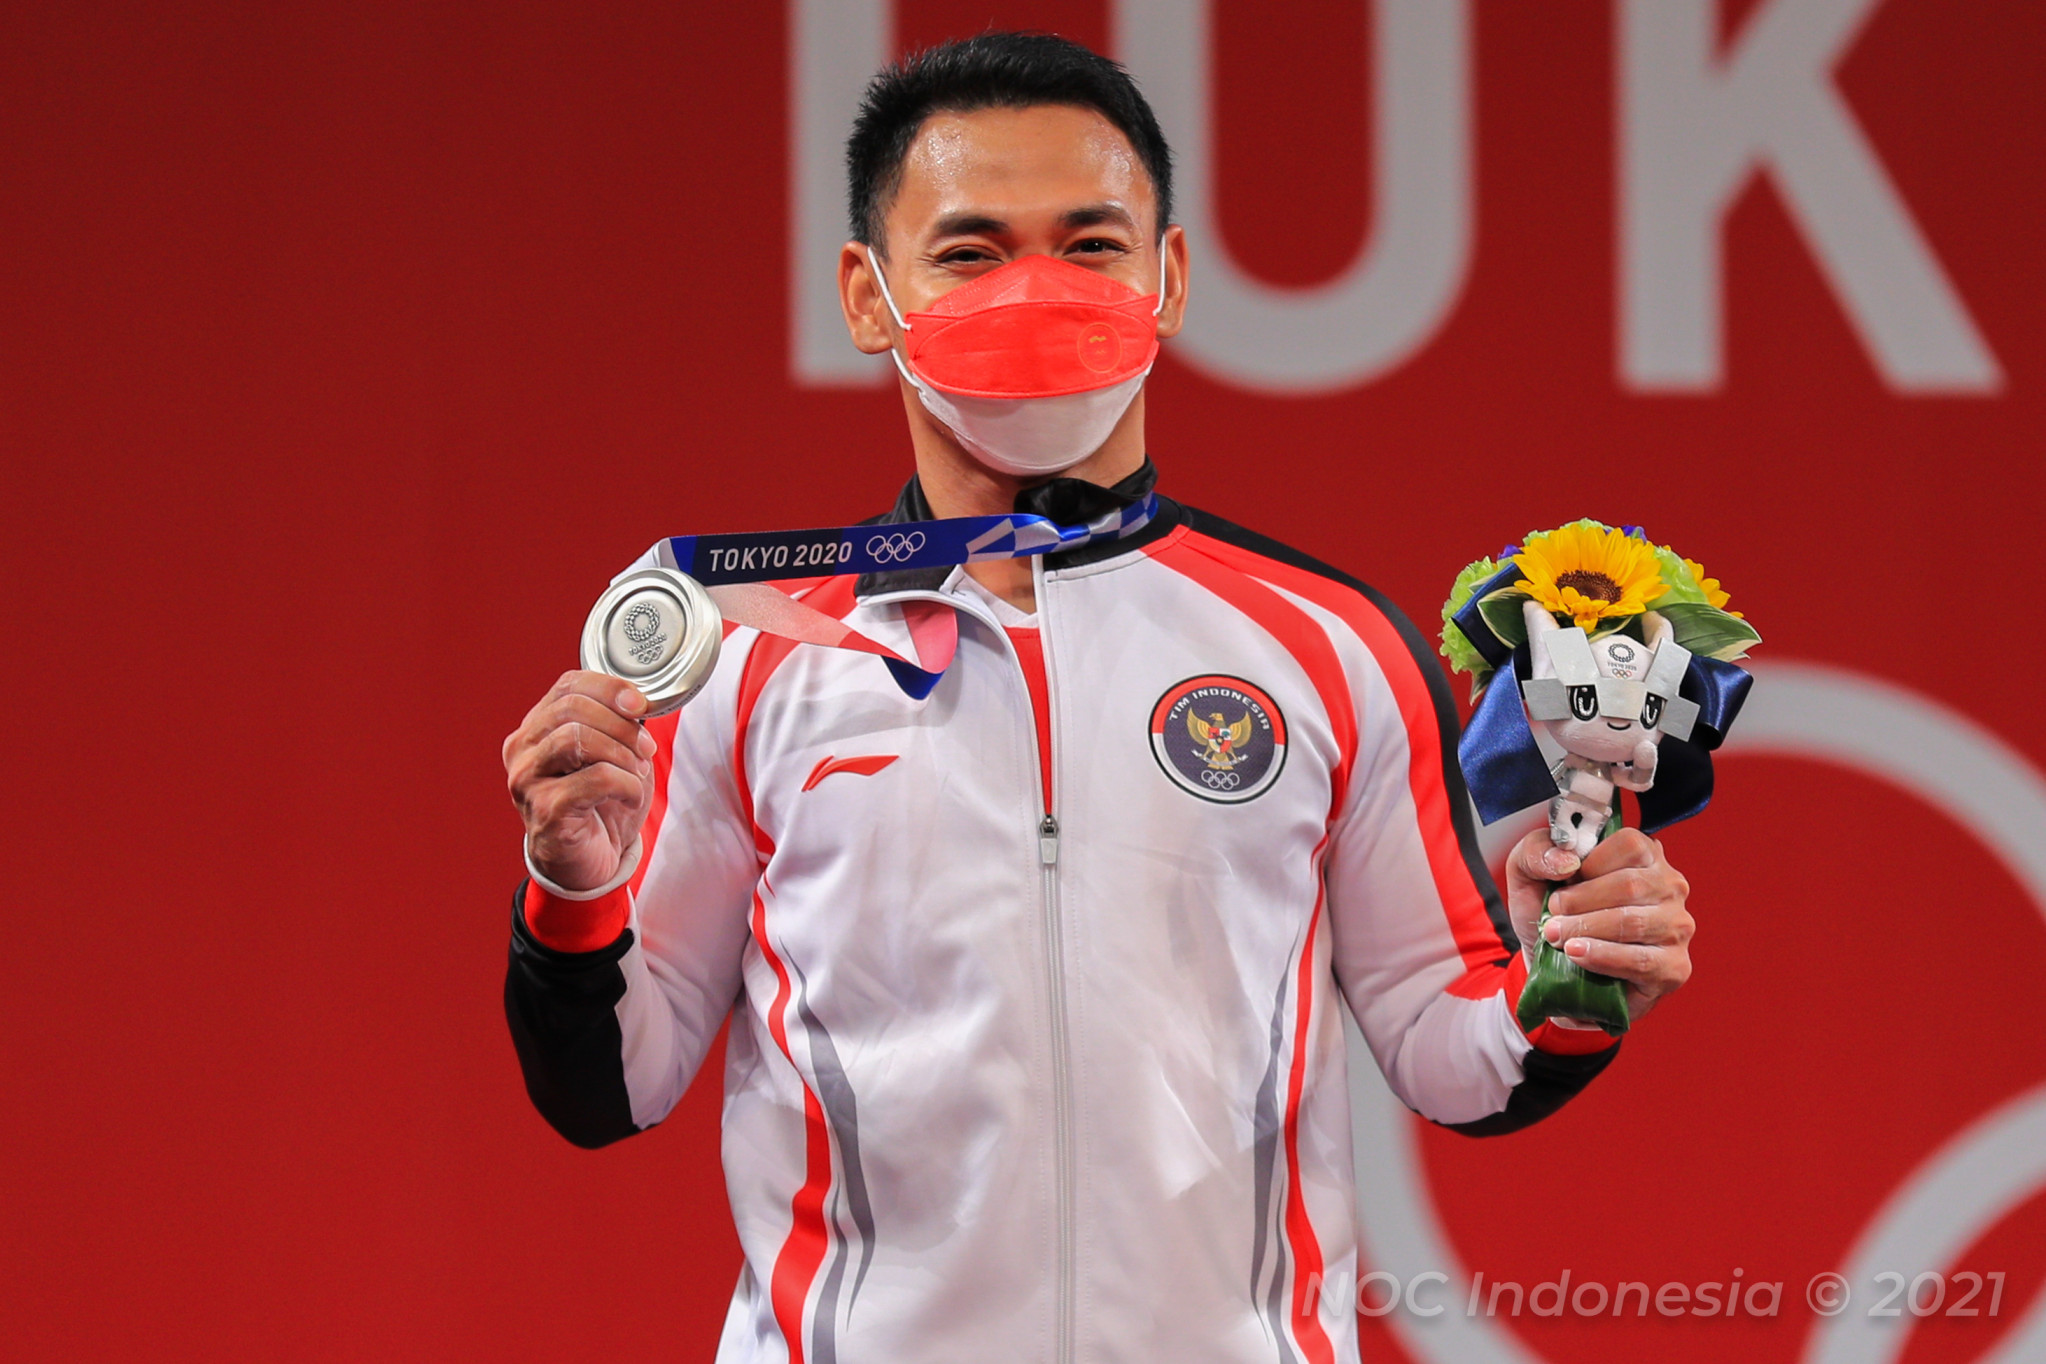 Eko Yuli wins Indonesia's Second Medal - Indonesia Olympic Commitee